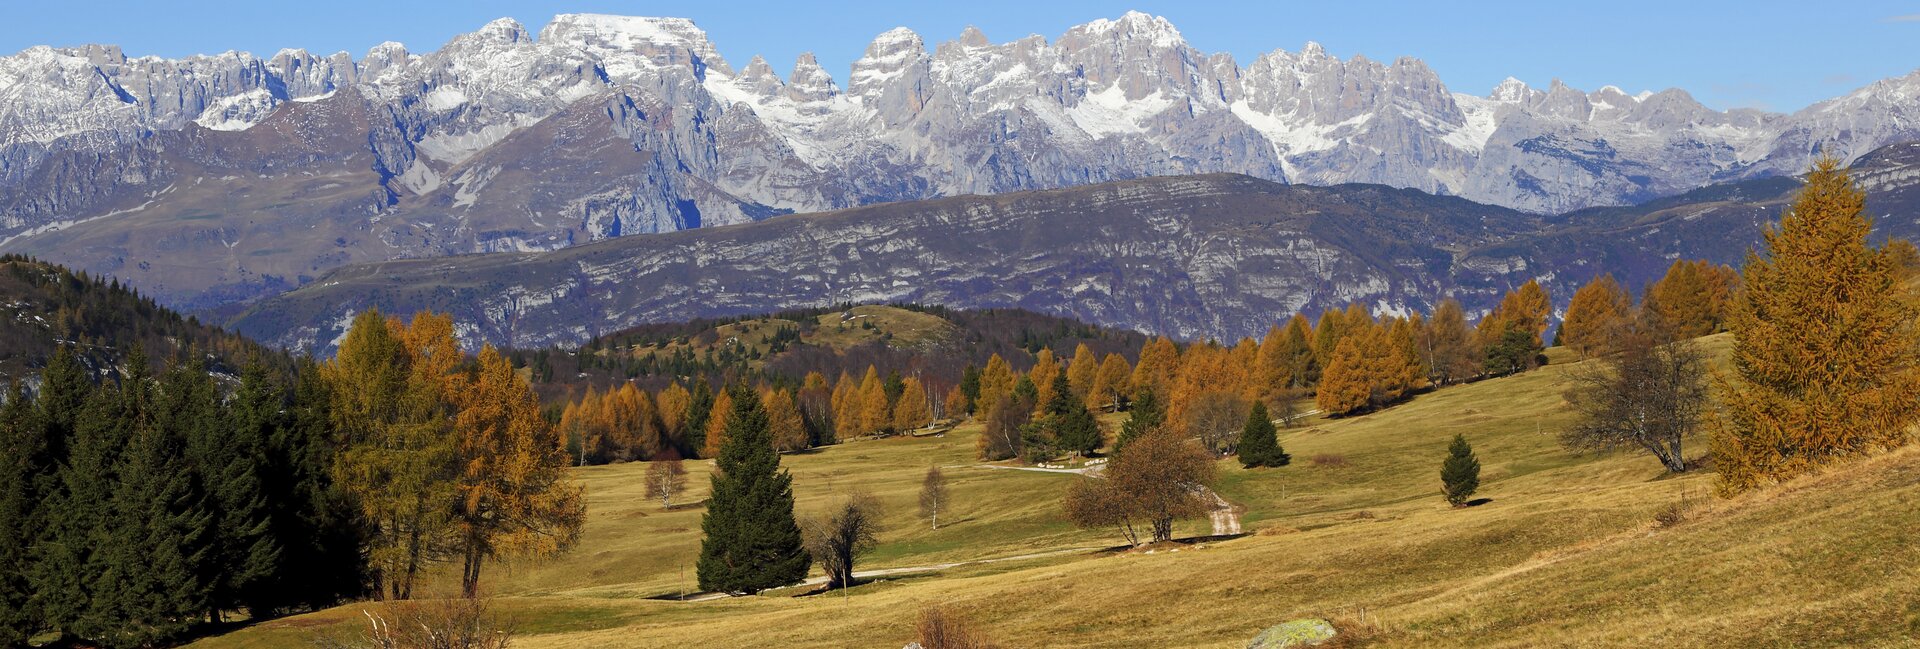 Valle dell'Adige - Monte Bondone
